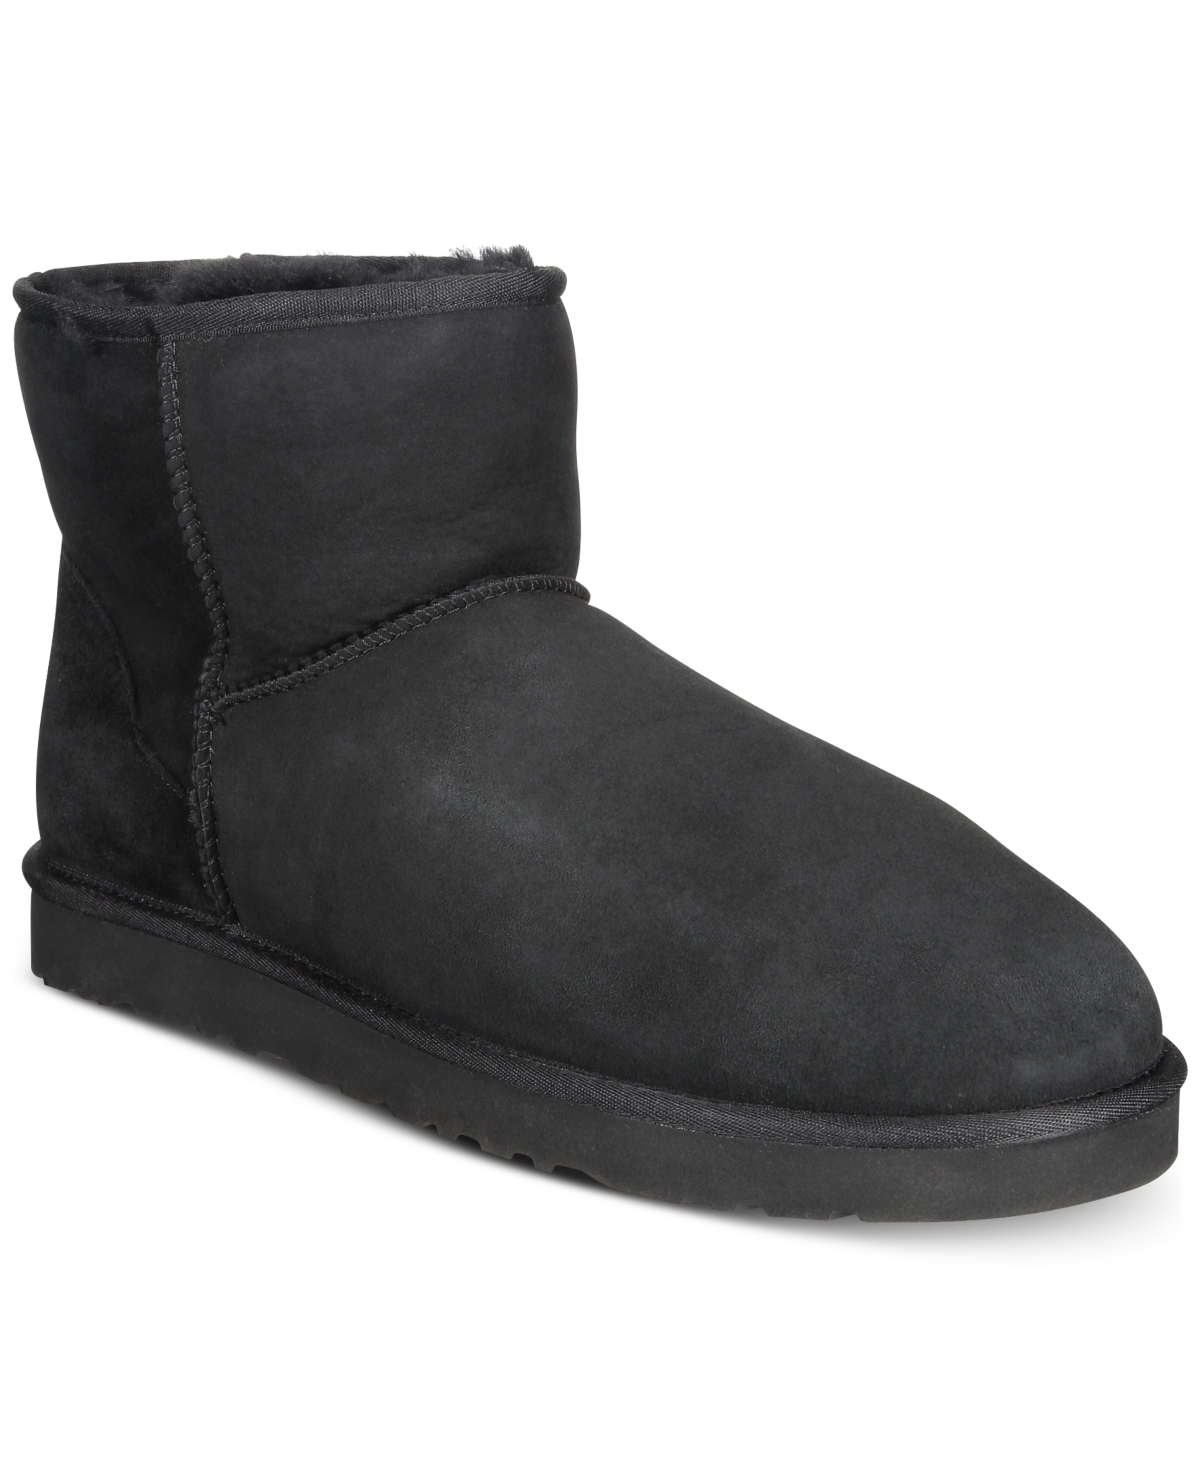 Men's Classic Mini Boots - Black